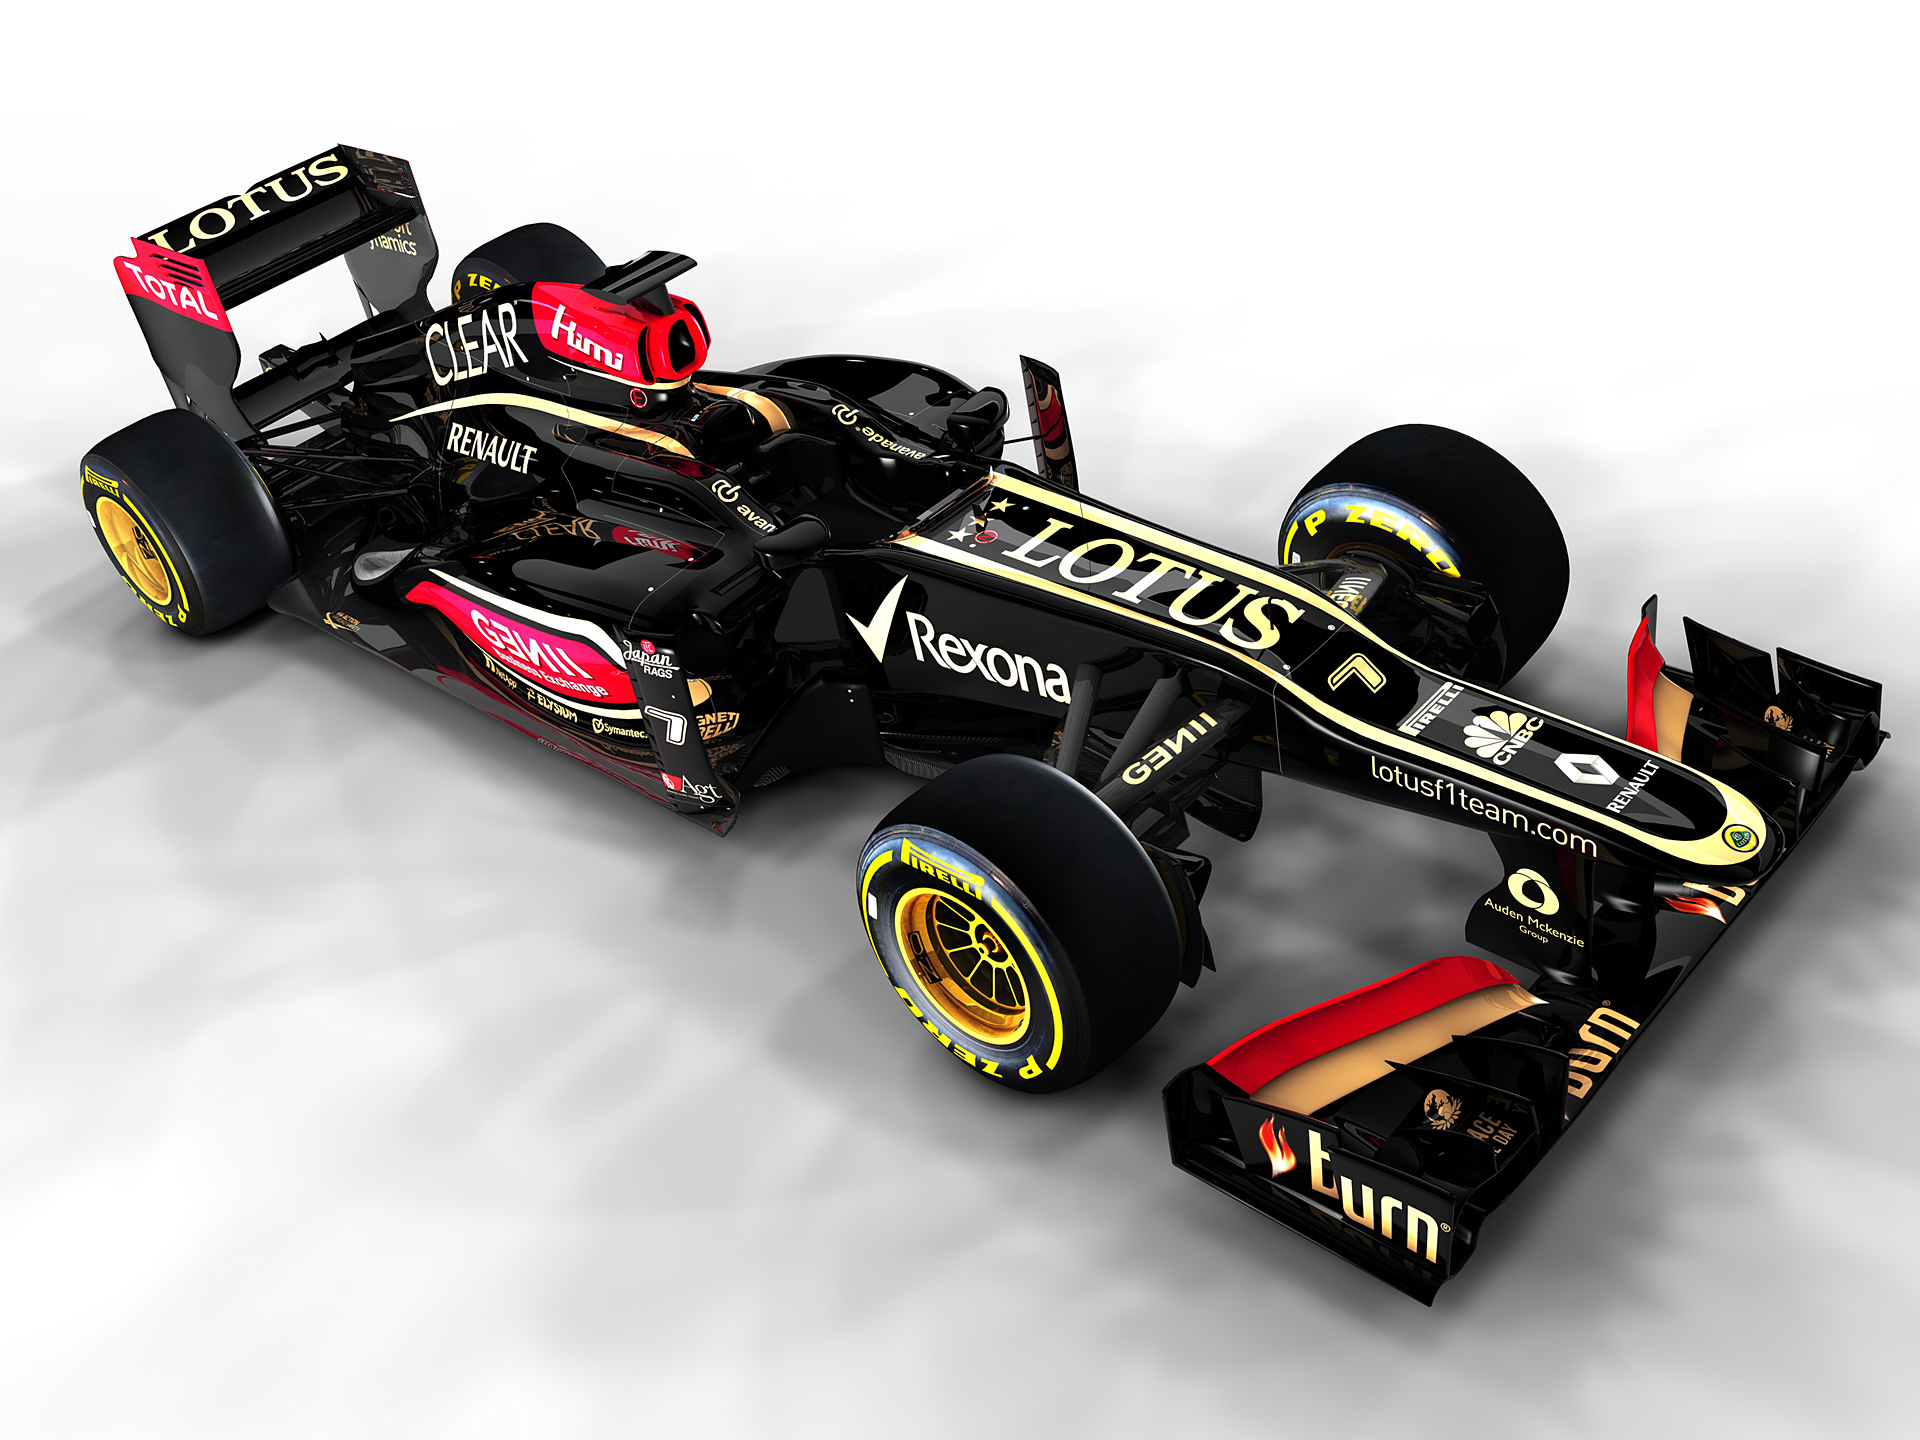  2013 Lotus Renault F1 E21 Wallpaper.